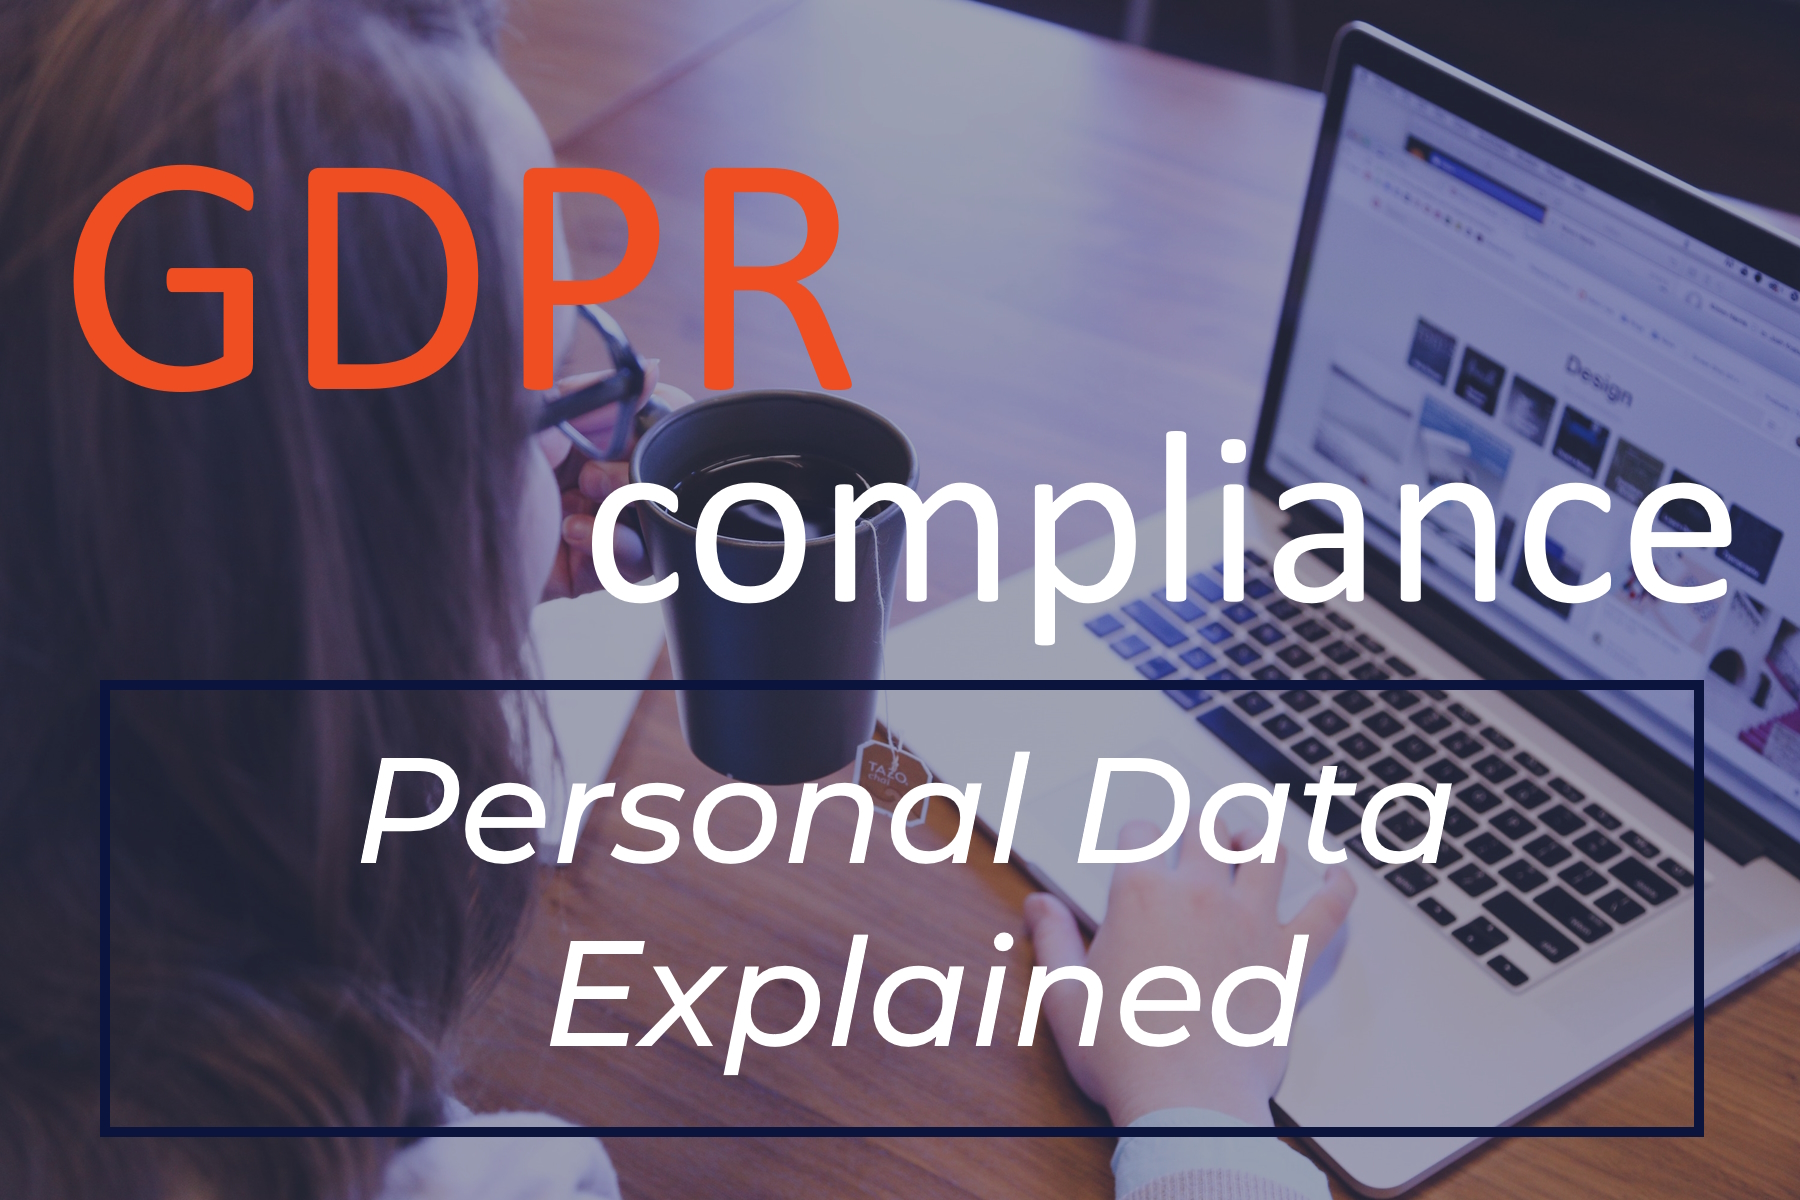 GDPR Compliance: Personal Data